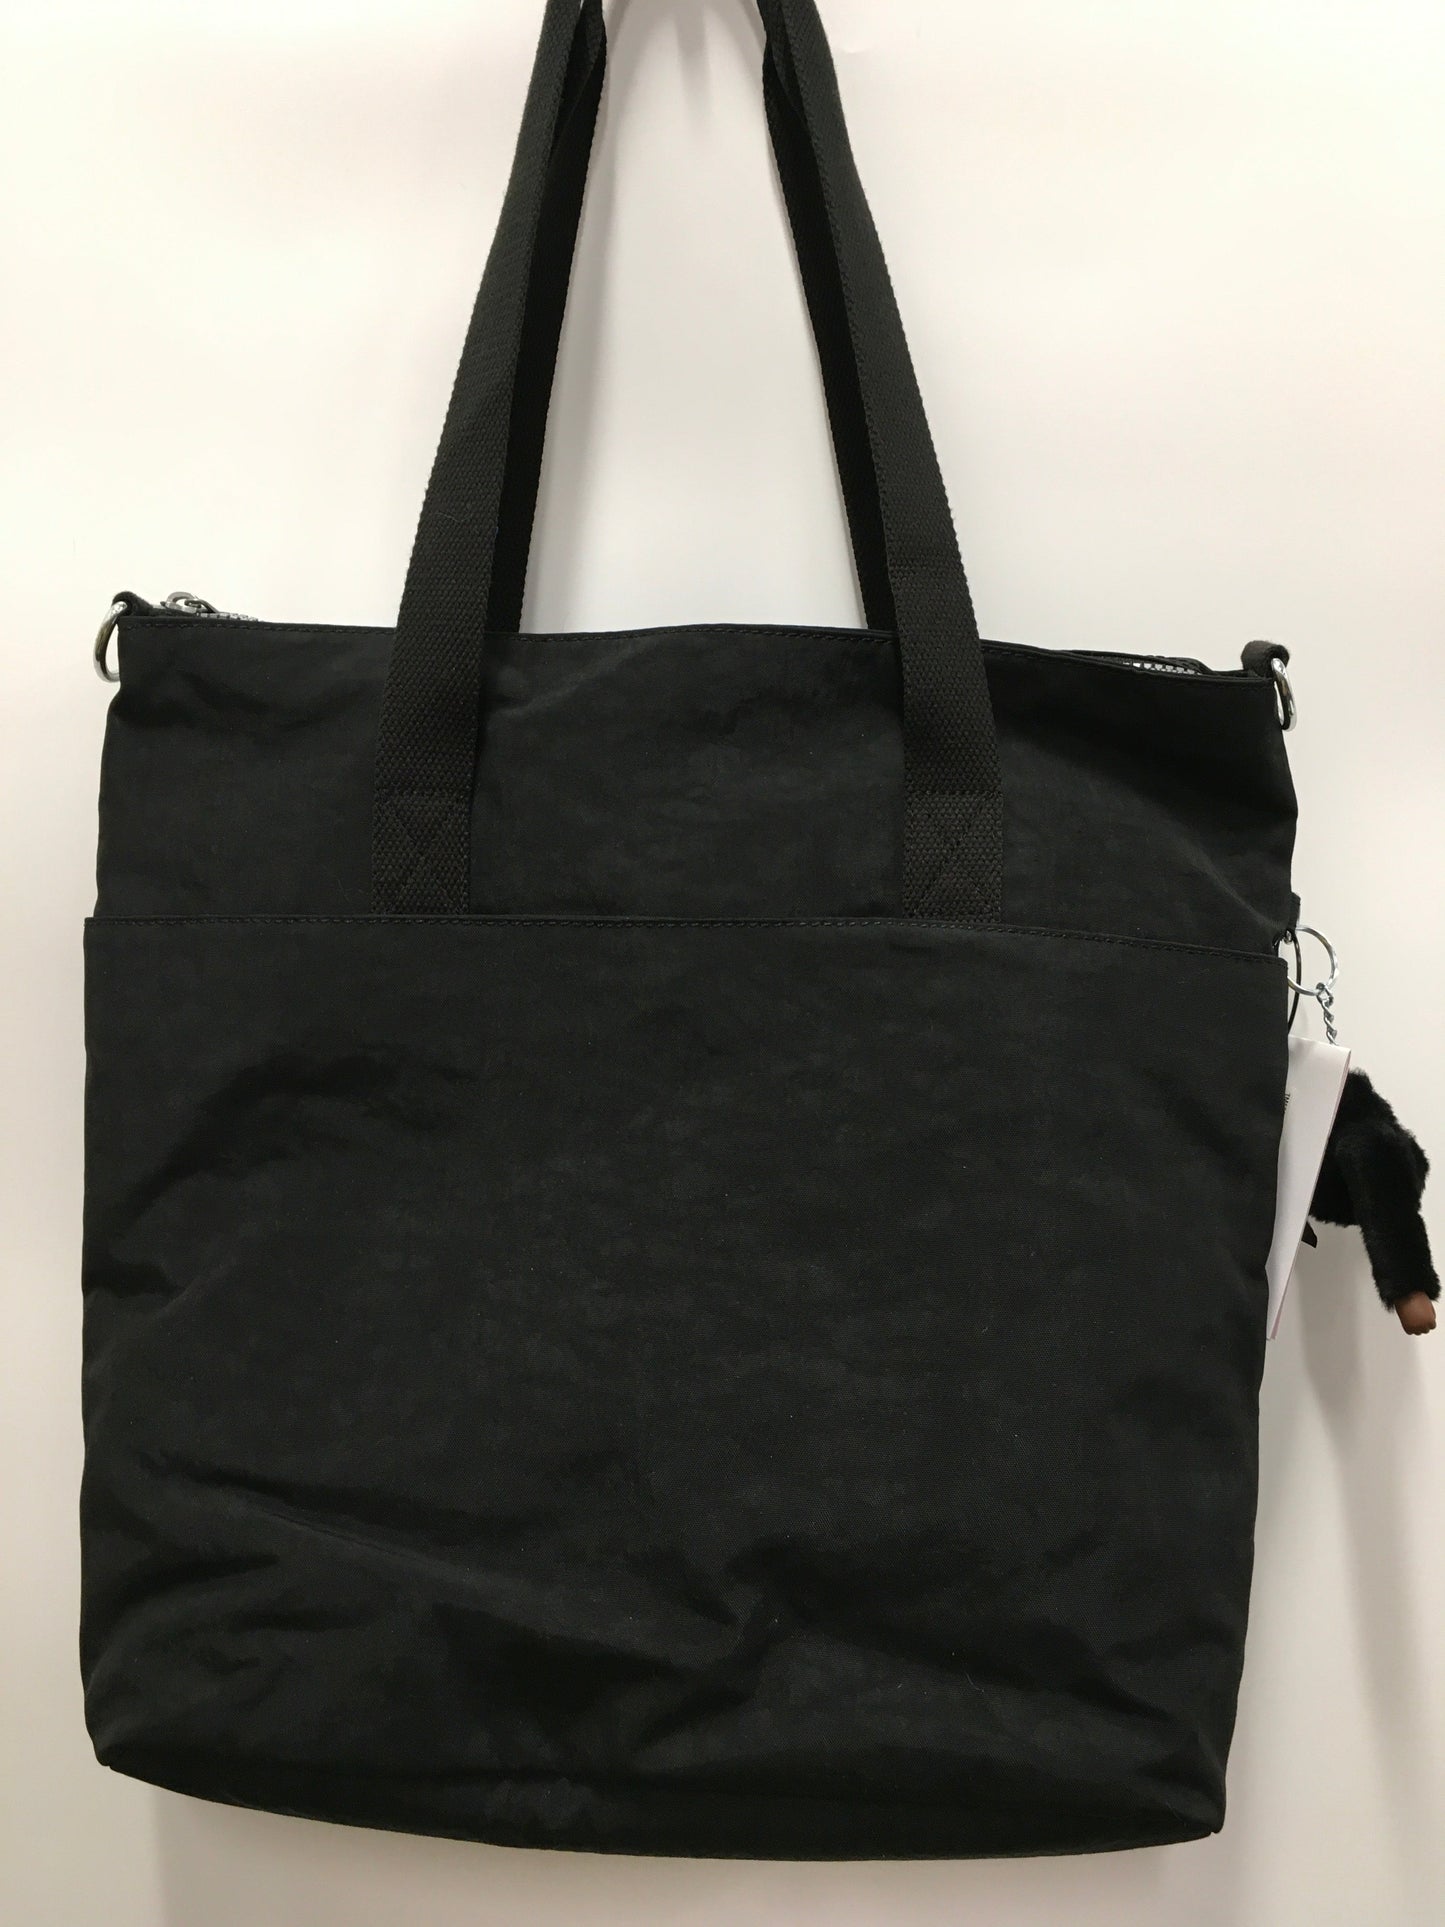 Handbag By Kipling  Size: Large